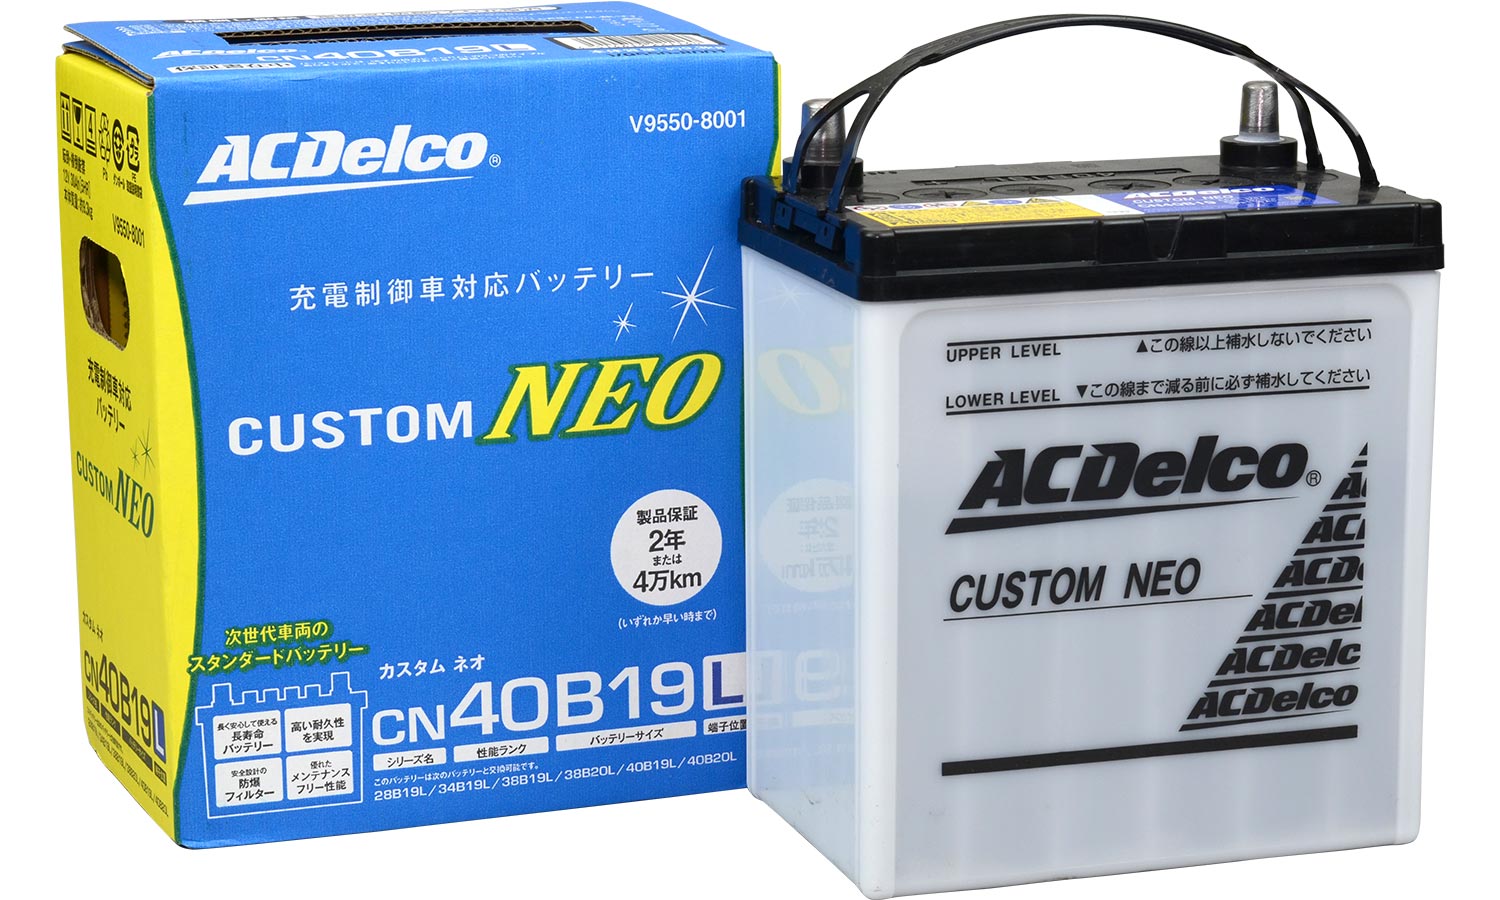 2022正規激安】 AC DELCO 充電制御車対応国産車用バッテリー AMS115D31L